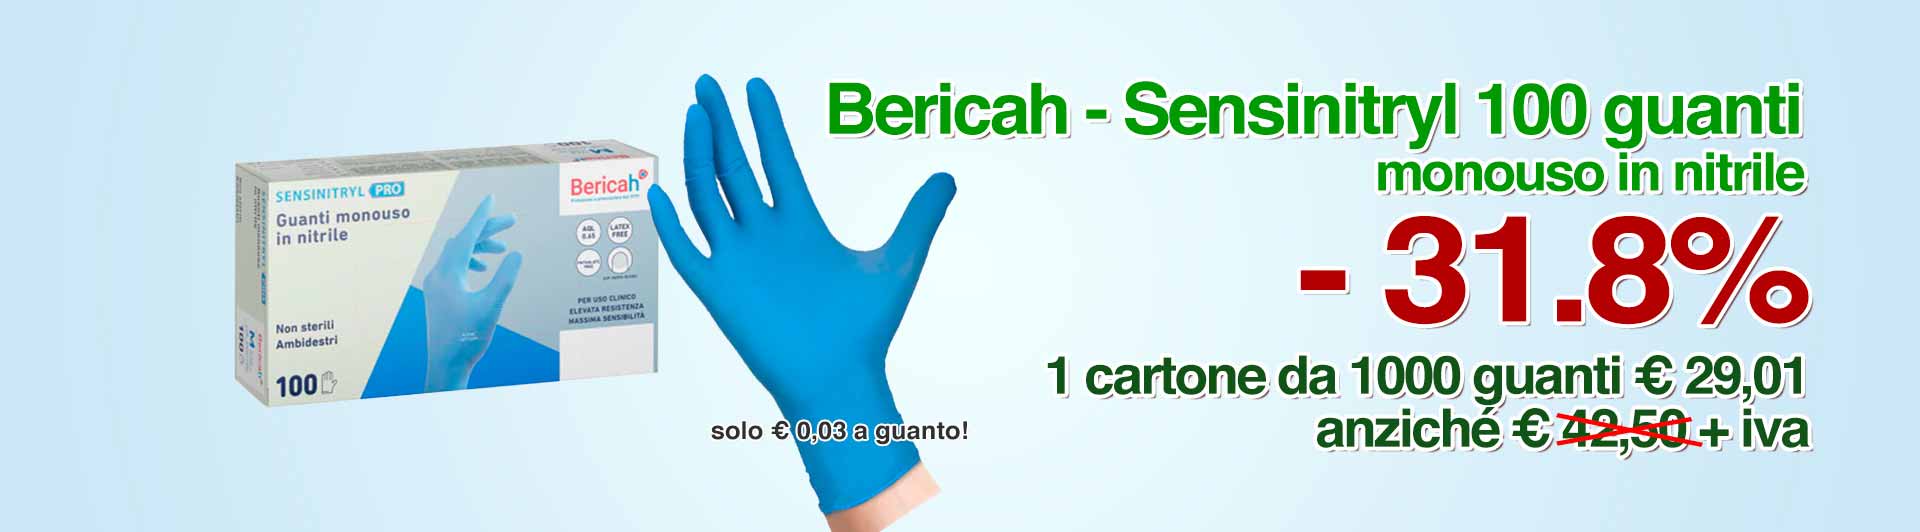 sconto sui guanti bericah Sensinitryl, acquista 10000 guanti a 29 euro anzich&eacute; 42,50, sconto del 31,8 %